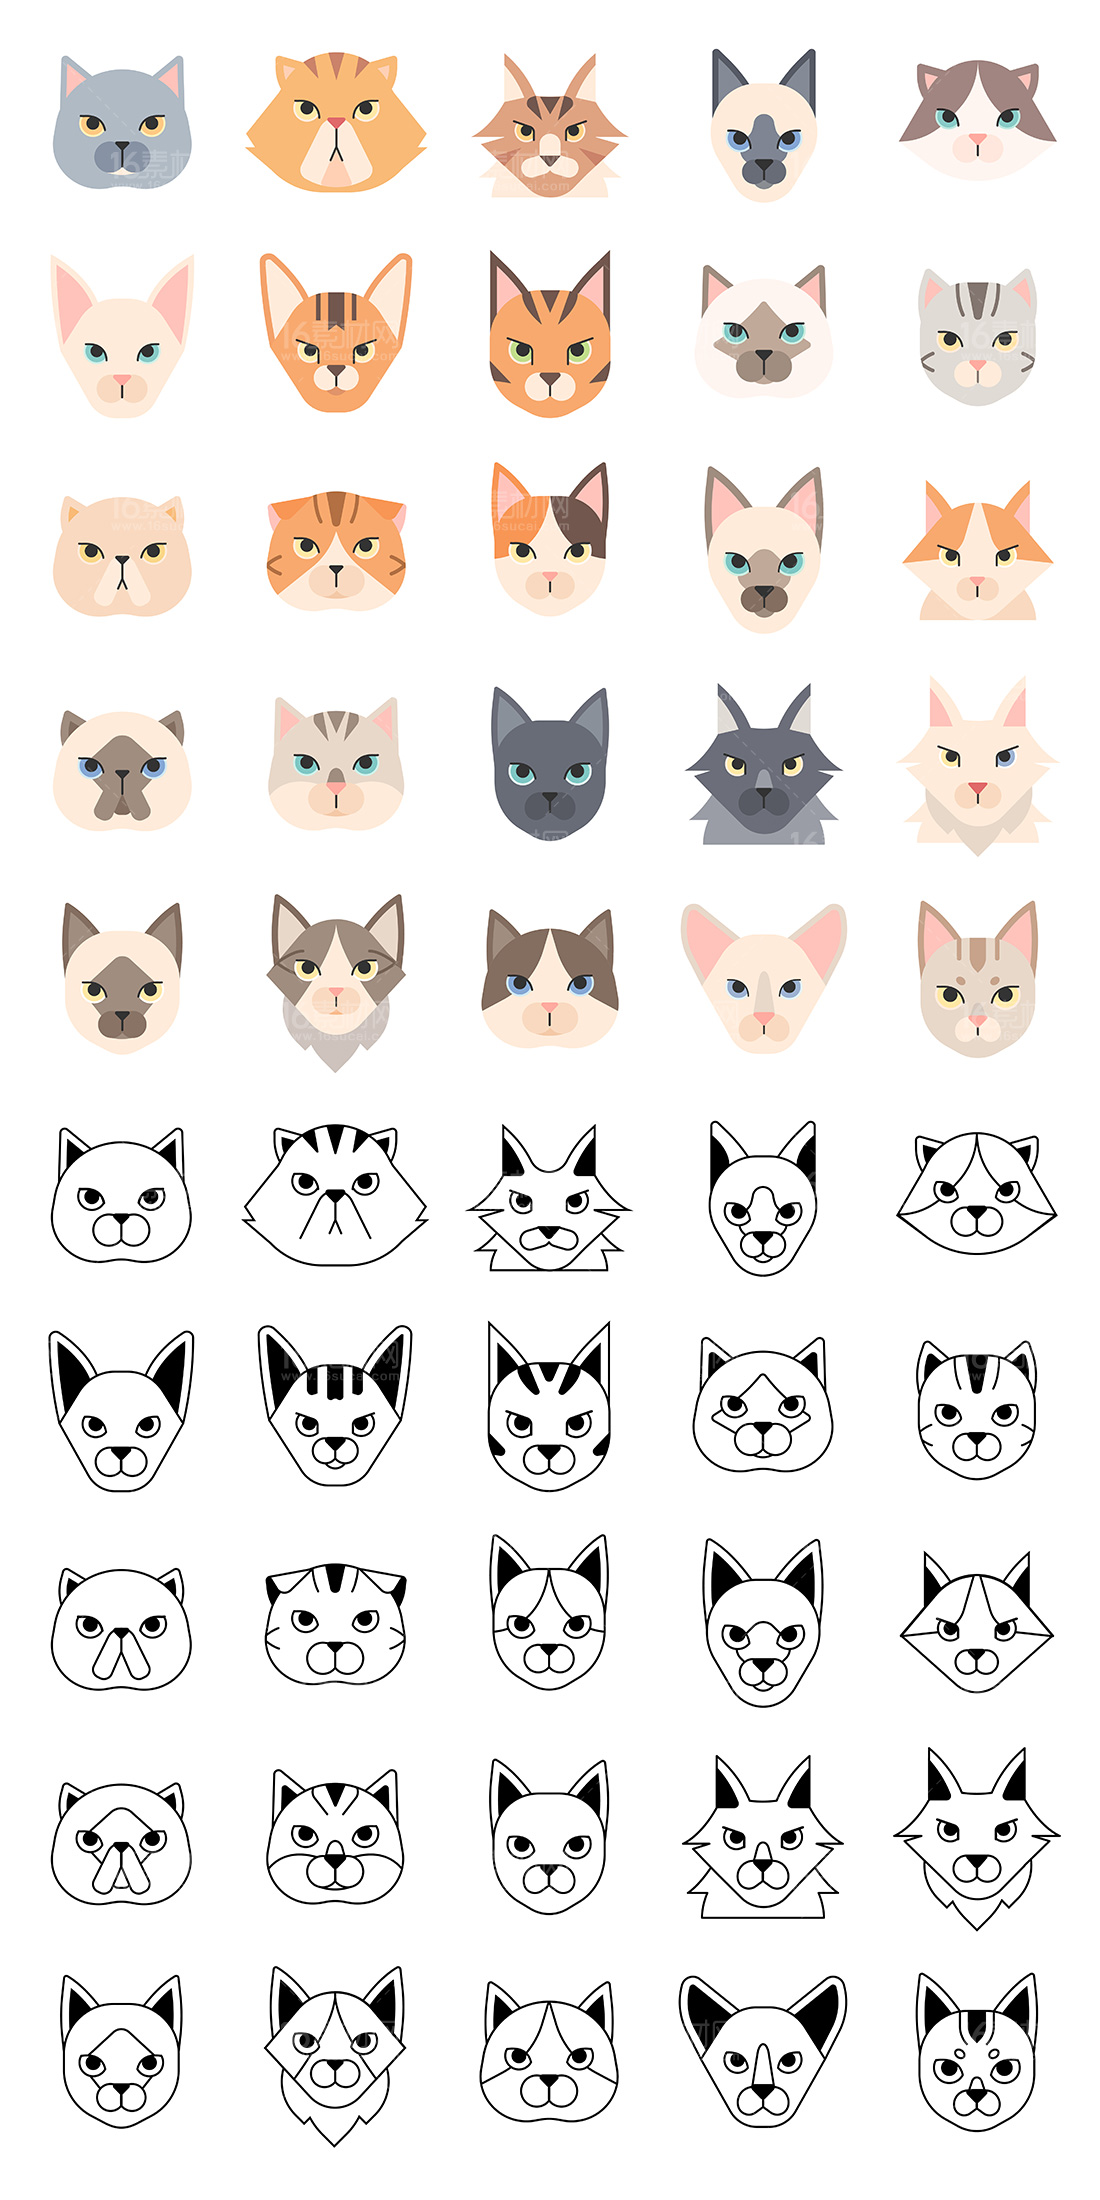 Cat_breeds_flat.jpg